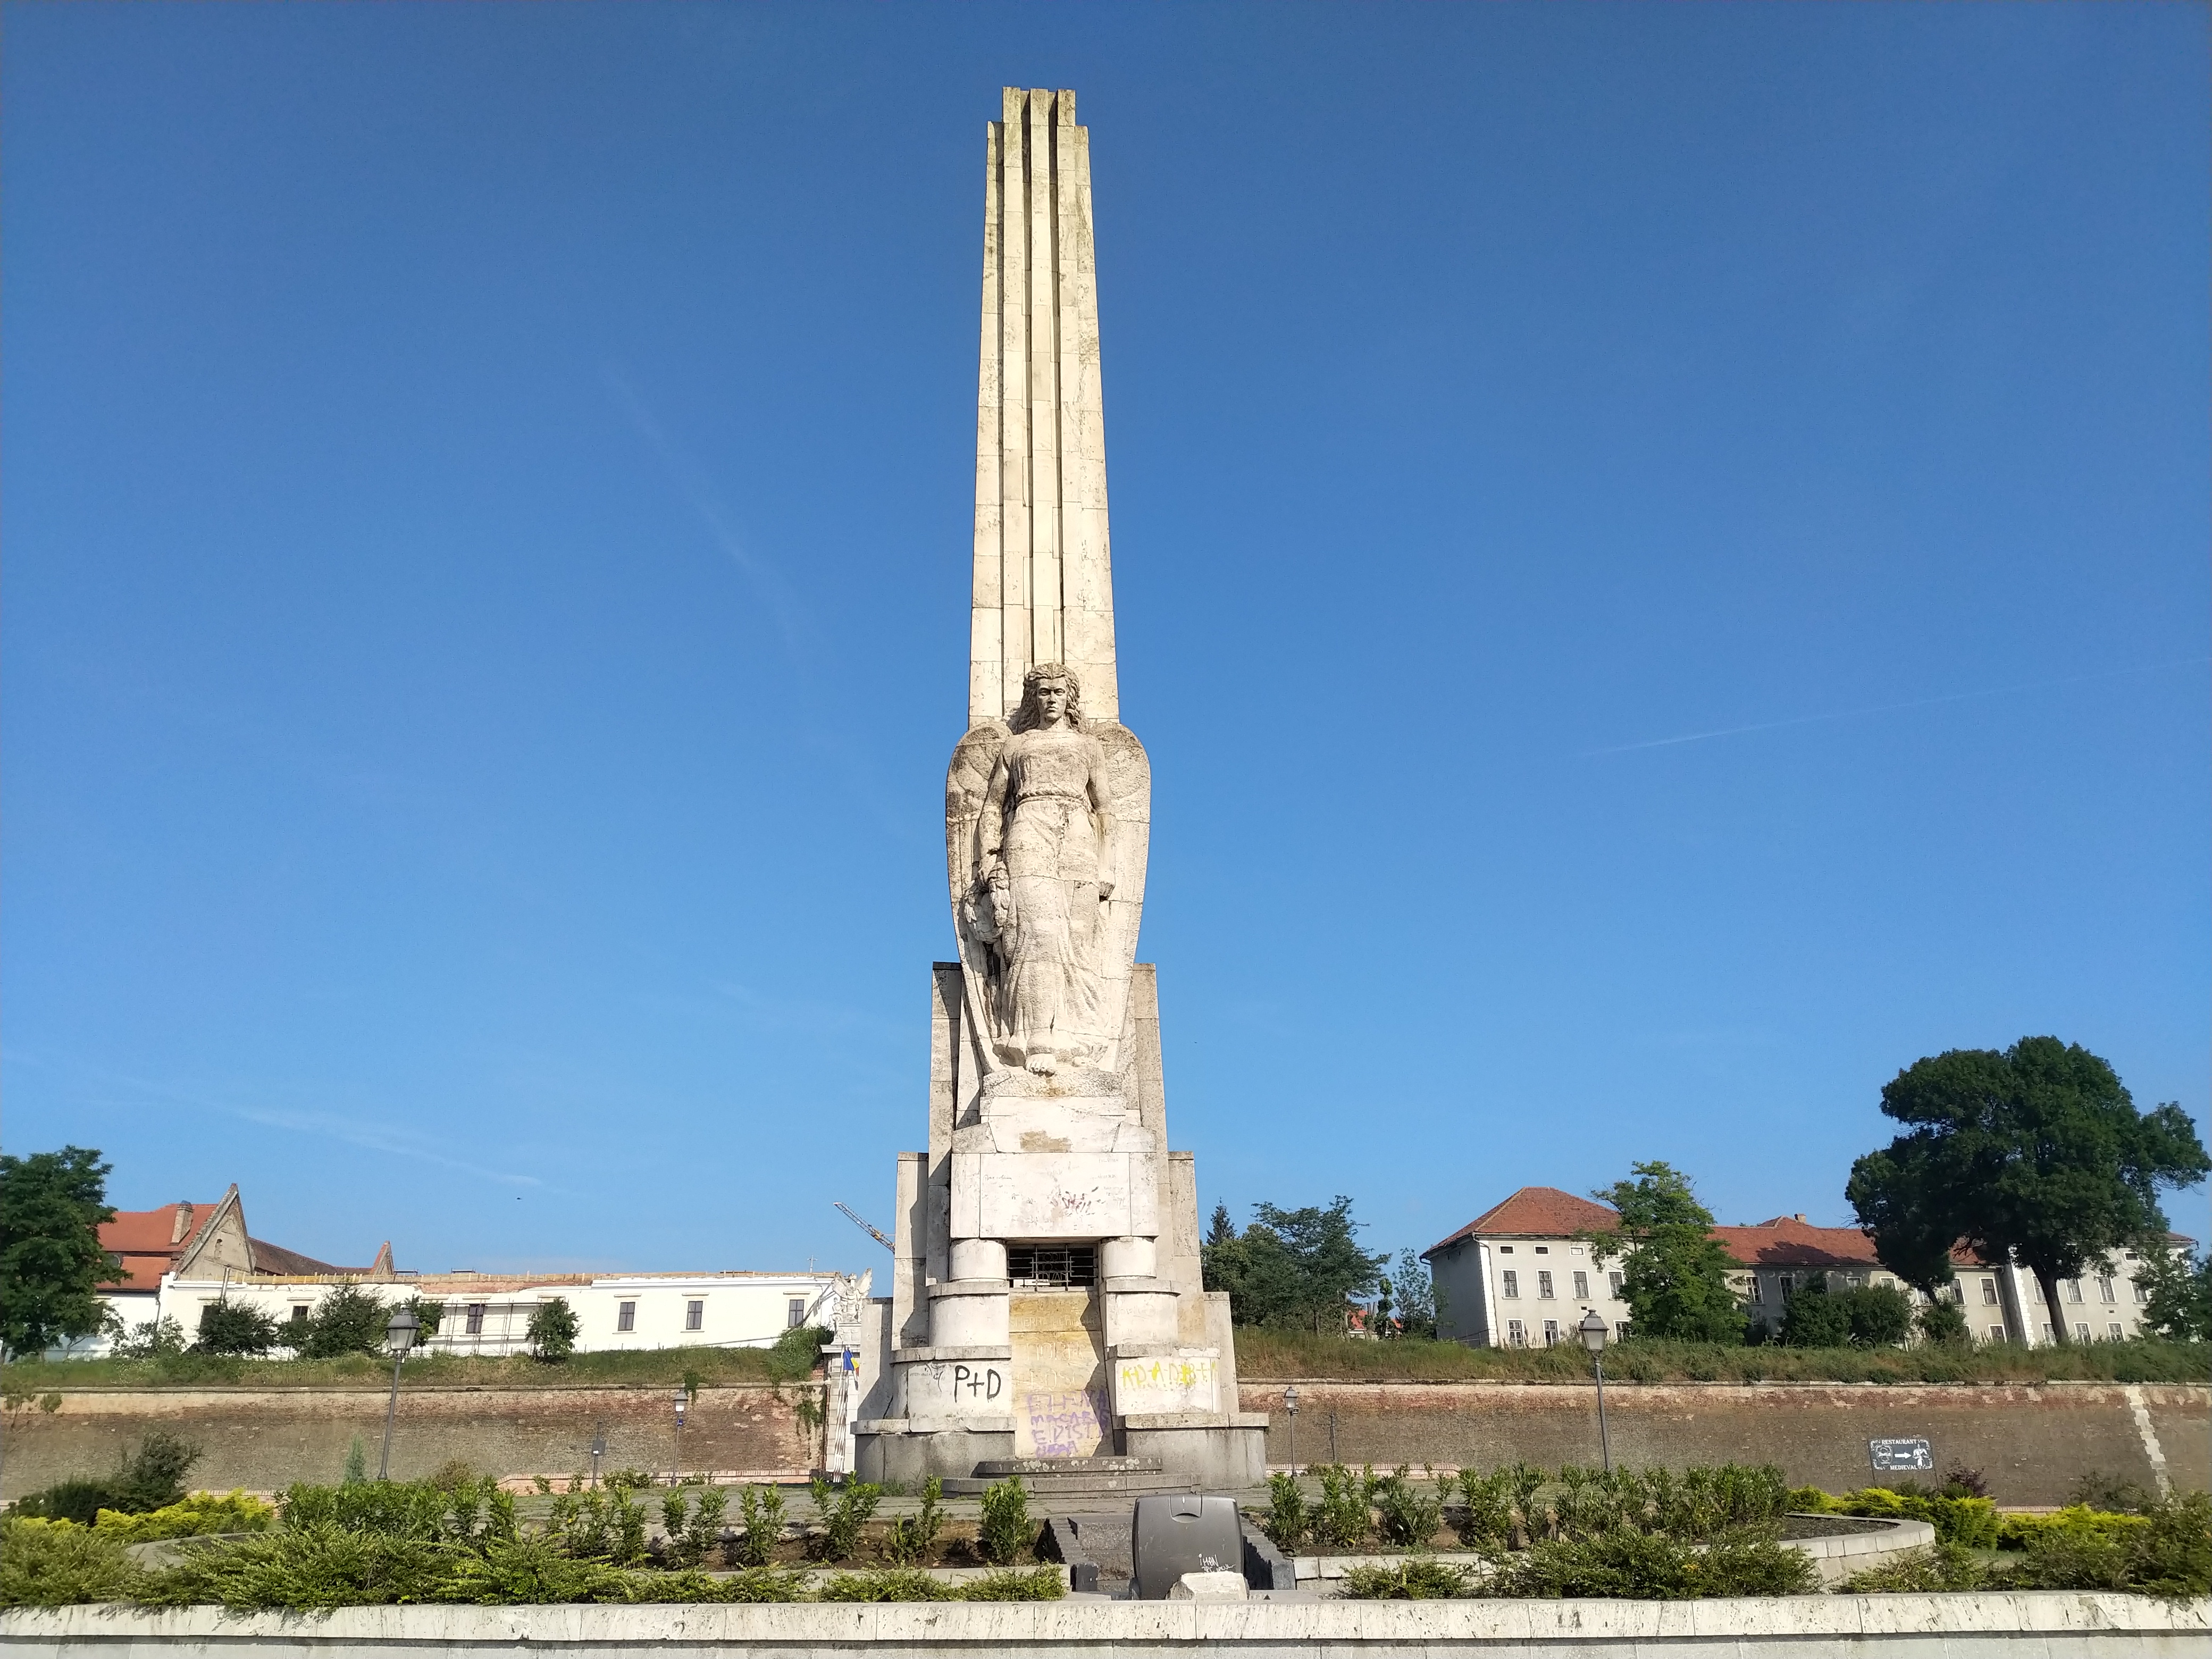 RO, Monument la intrarea in cetatea Alba Carolina